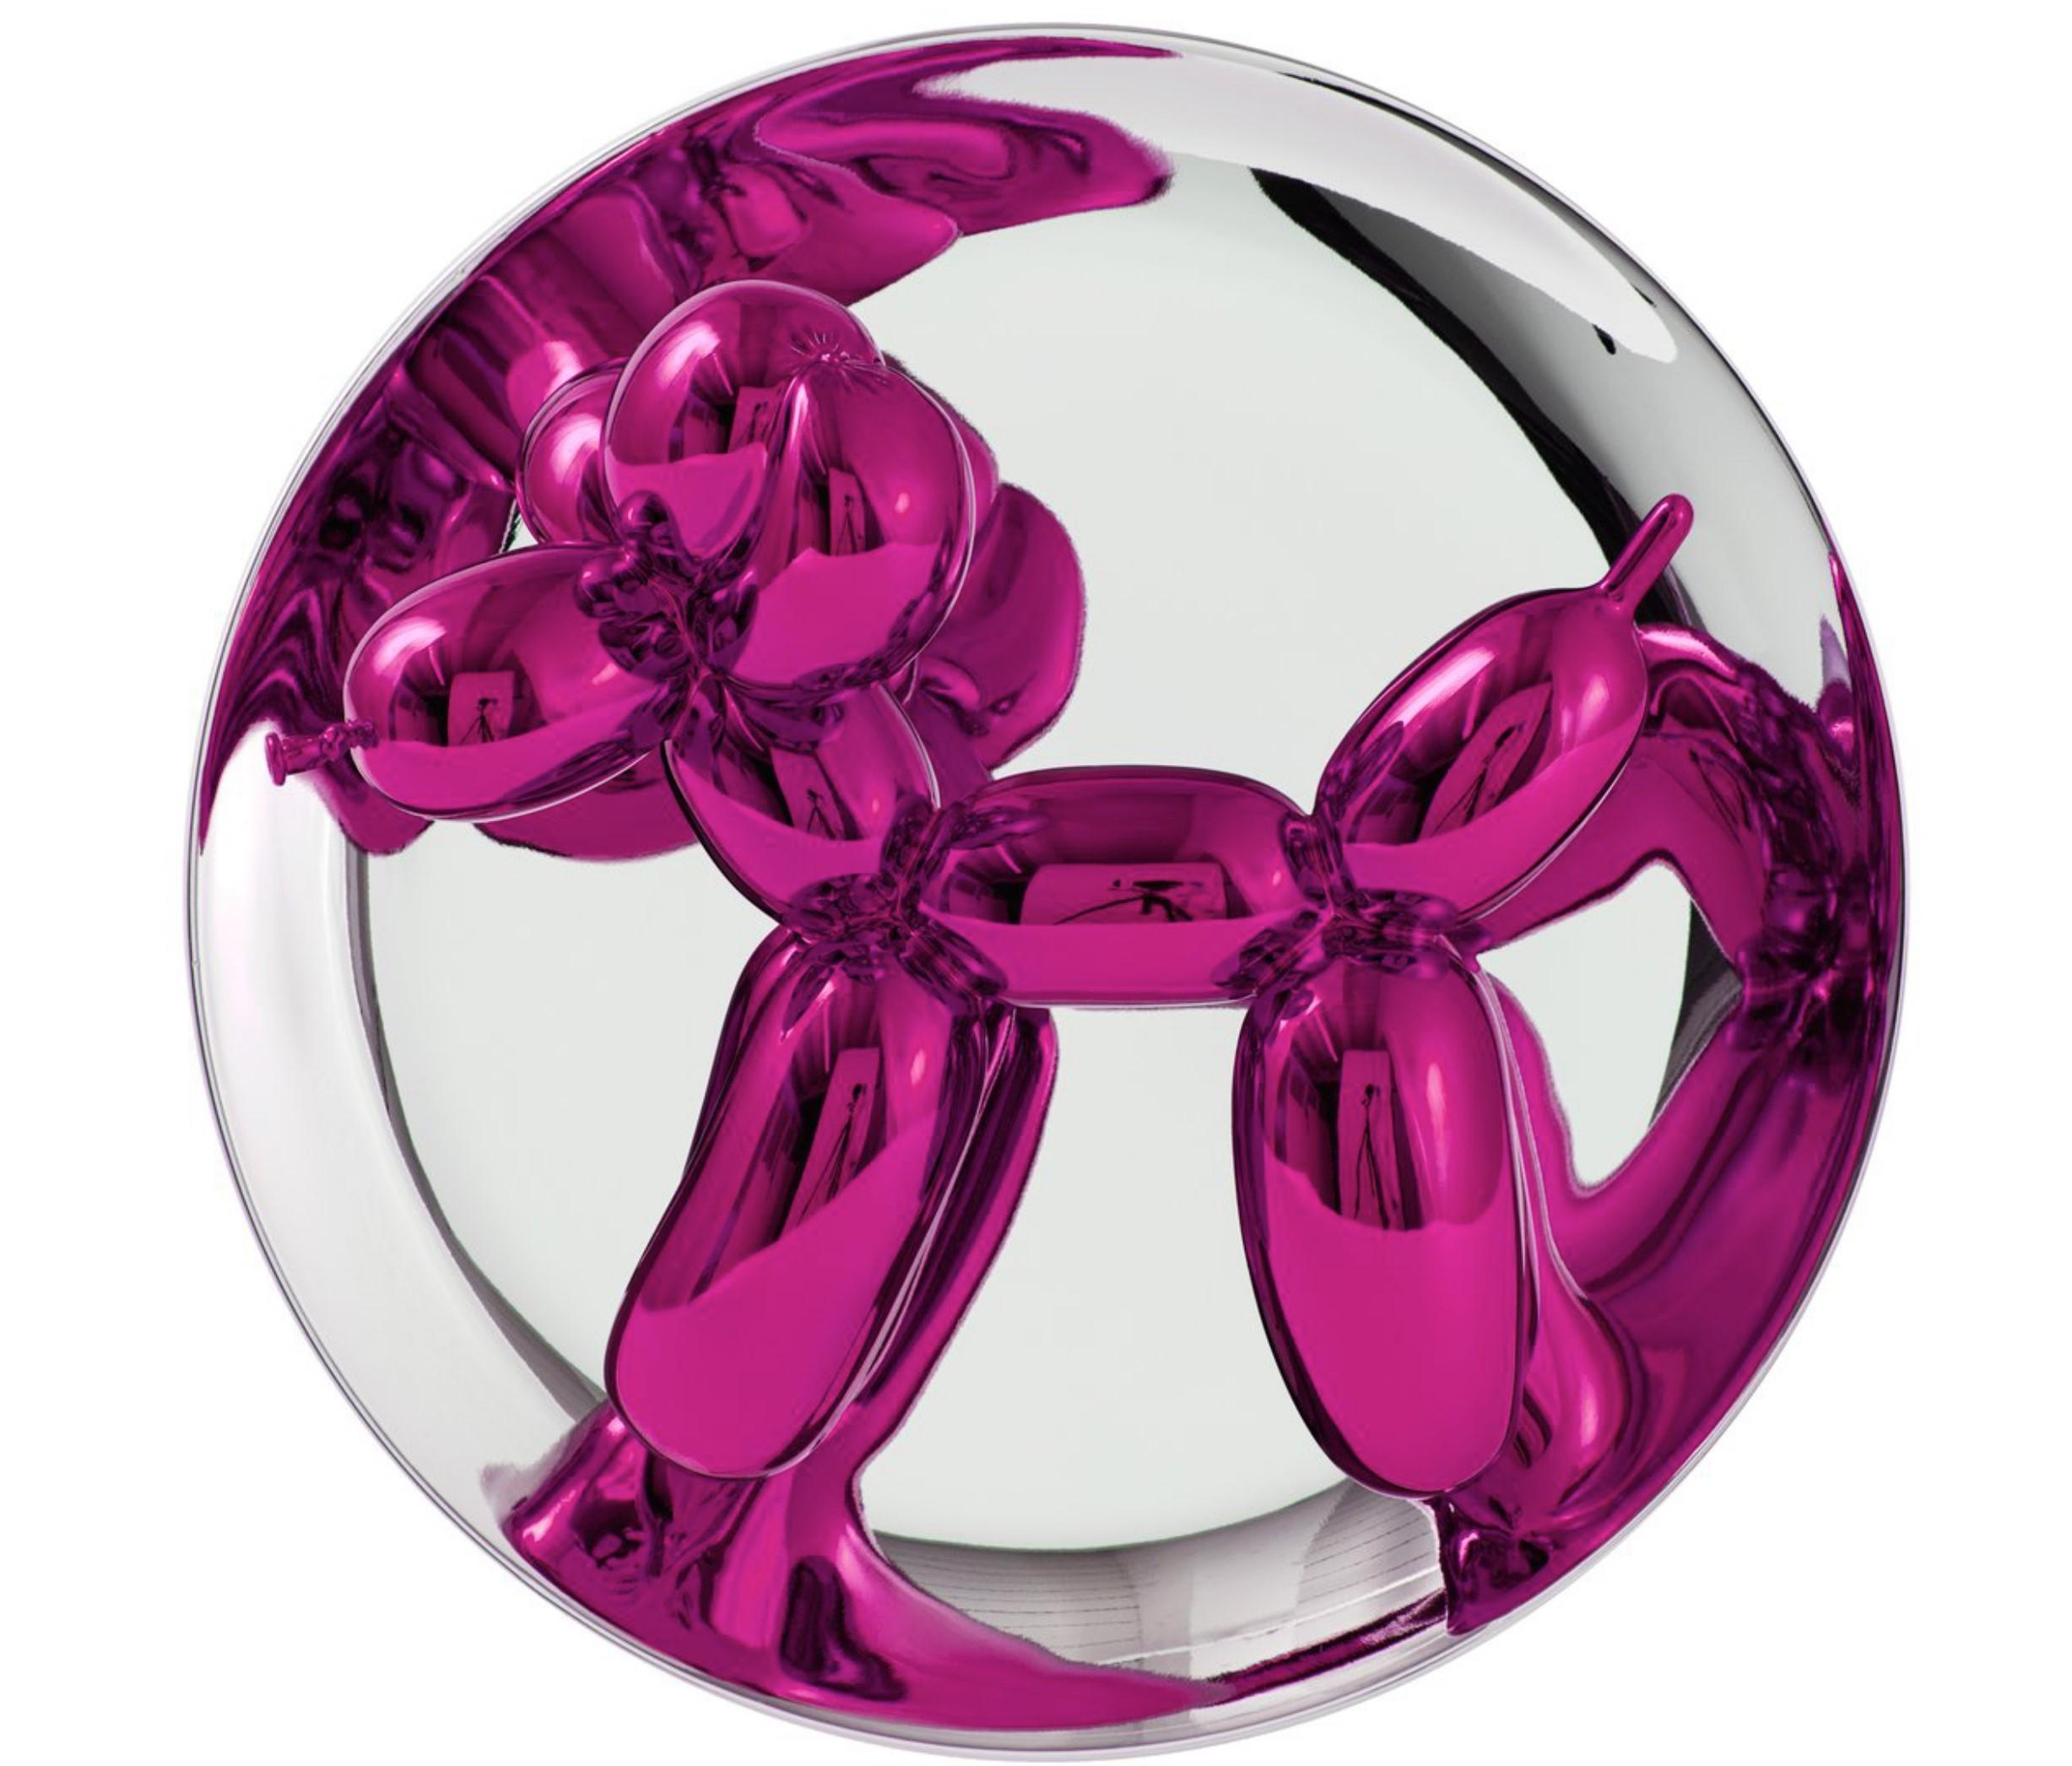 Ballon Dog Magenta - Sculpture by Jeff Koons